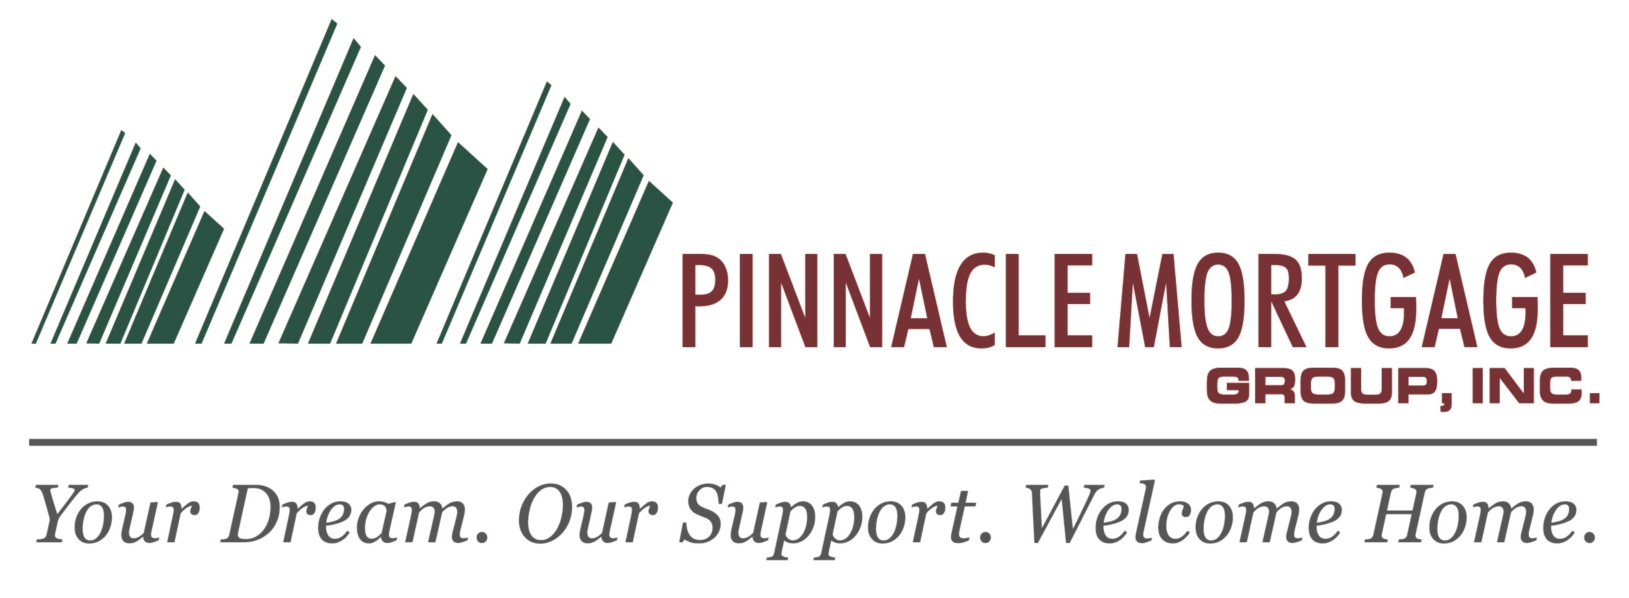 Pinnacle Mortgage Group Inc logo